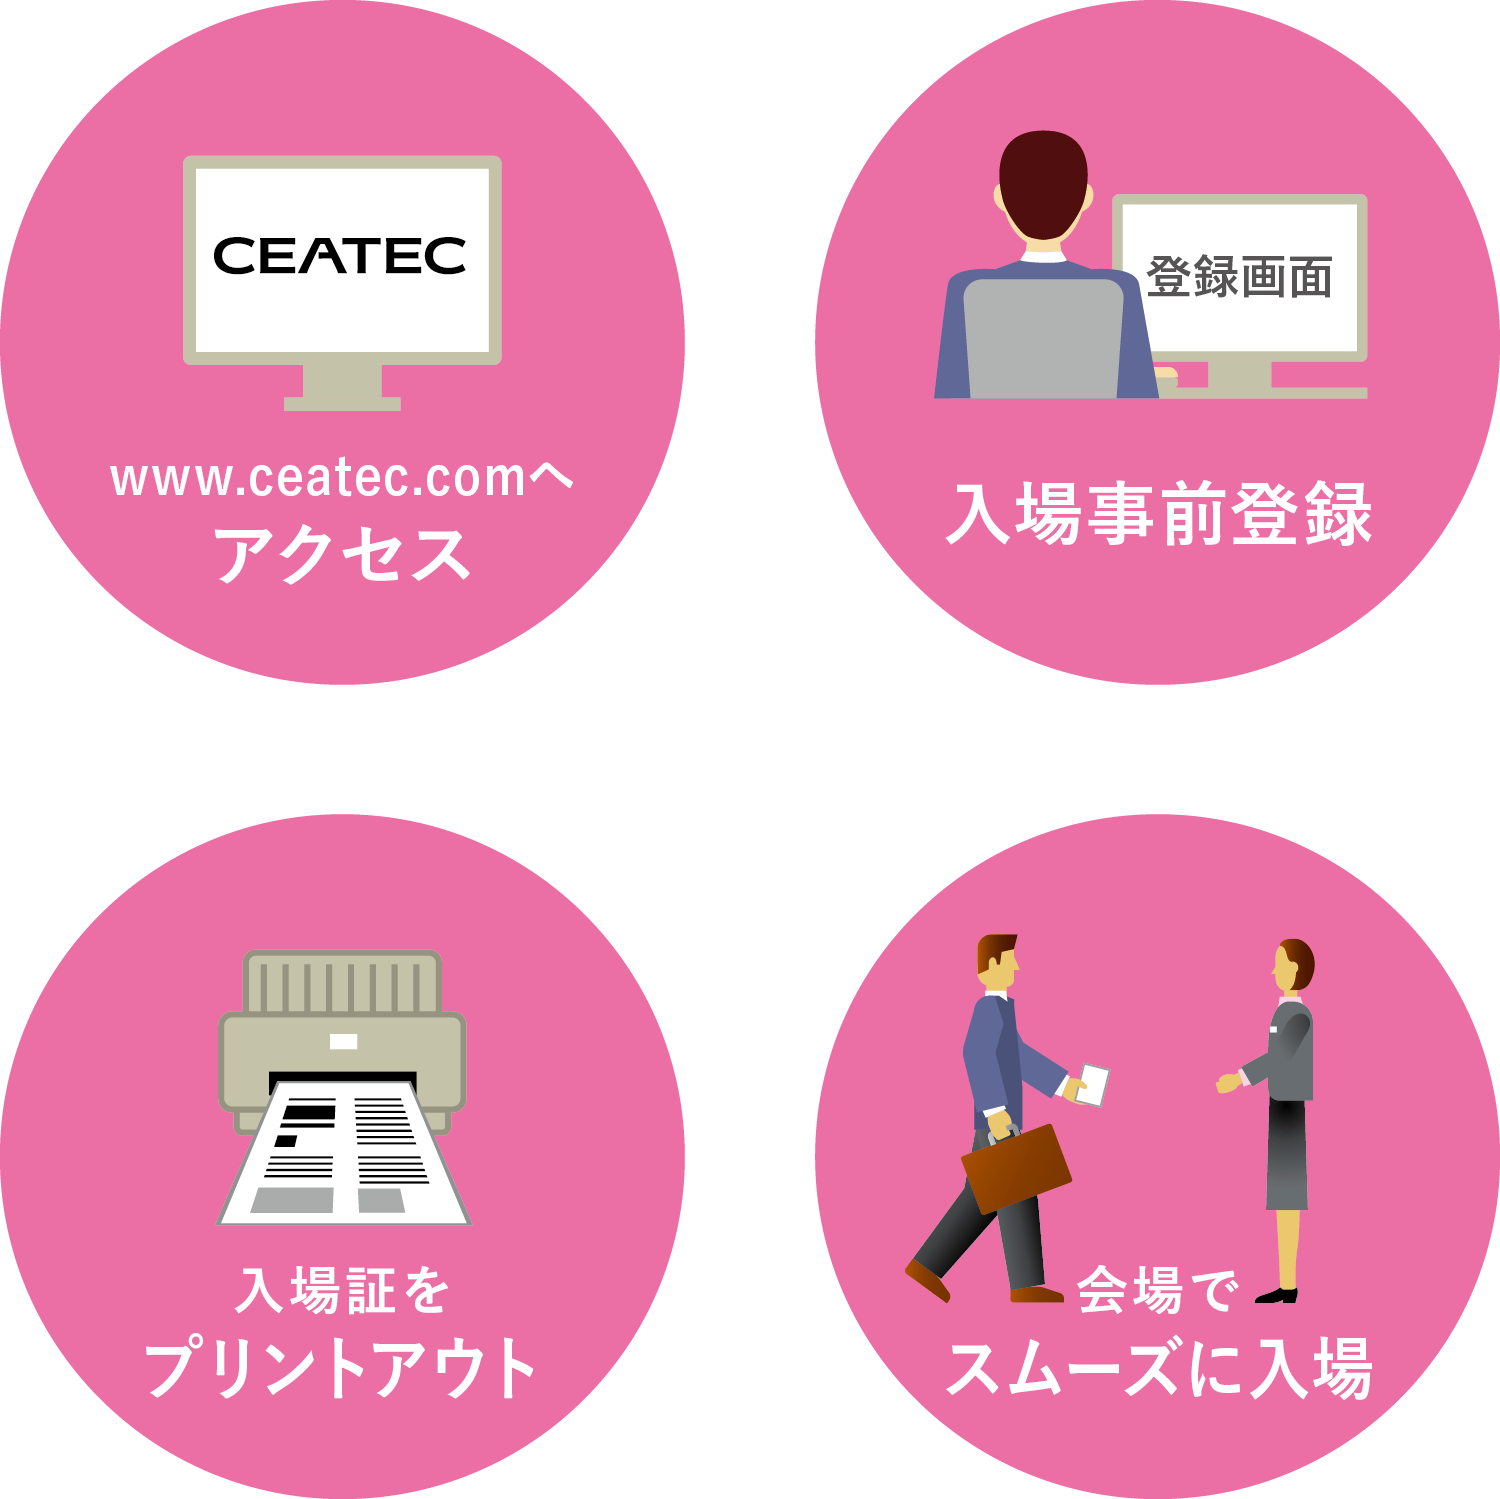 www.ceatec.comへアクセス→入場事前登録→入場証をプリントアウト→会場でスムーズに入場